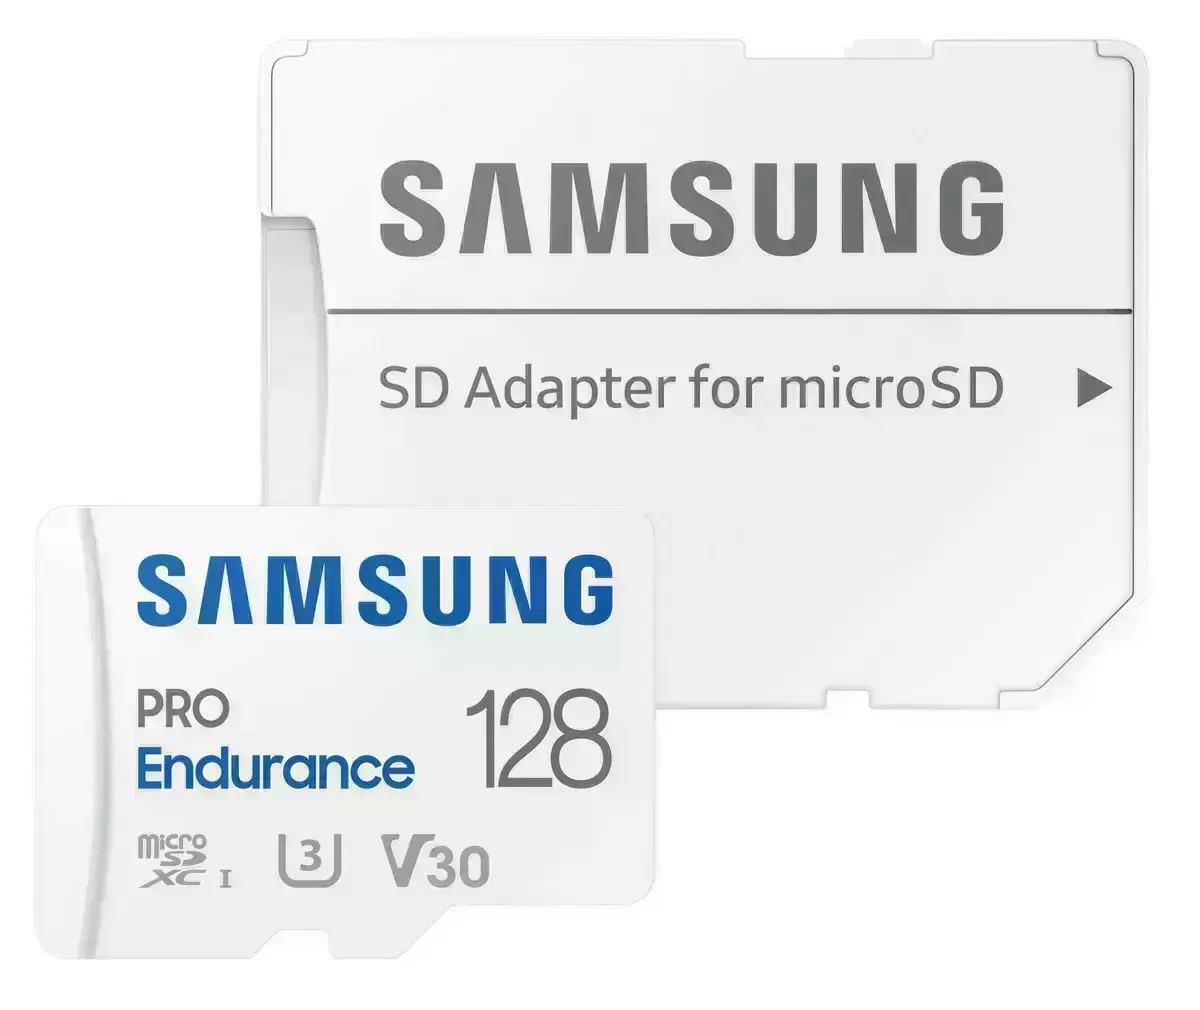 128GB Samsung Pro Endurance Class 10 U3 V30 microSDXC Memory Card for $9.99